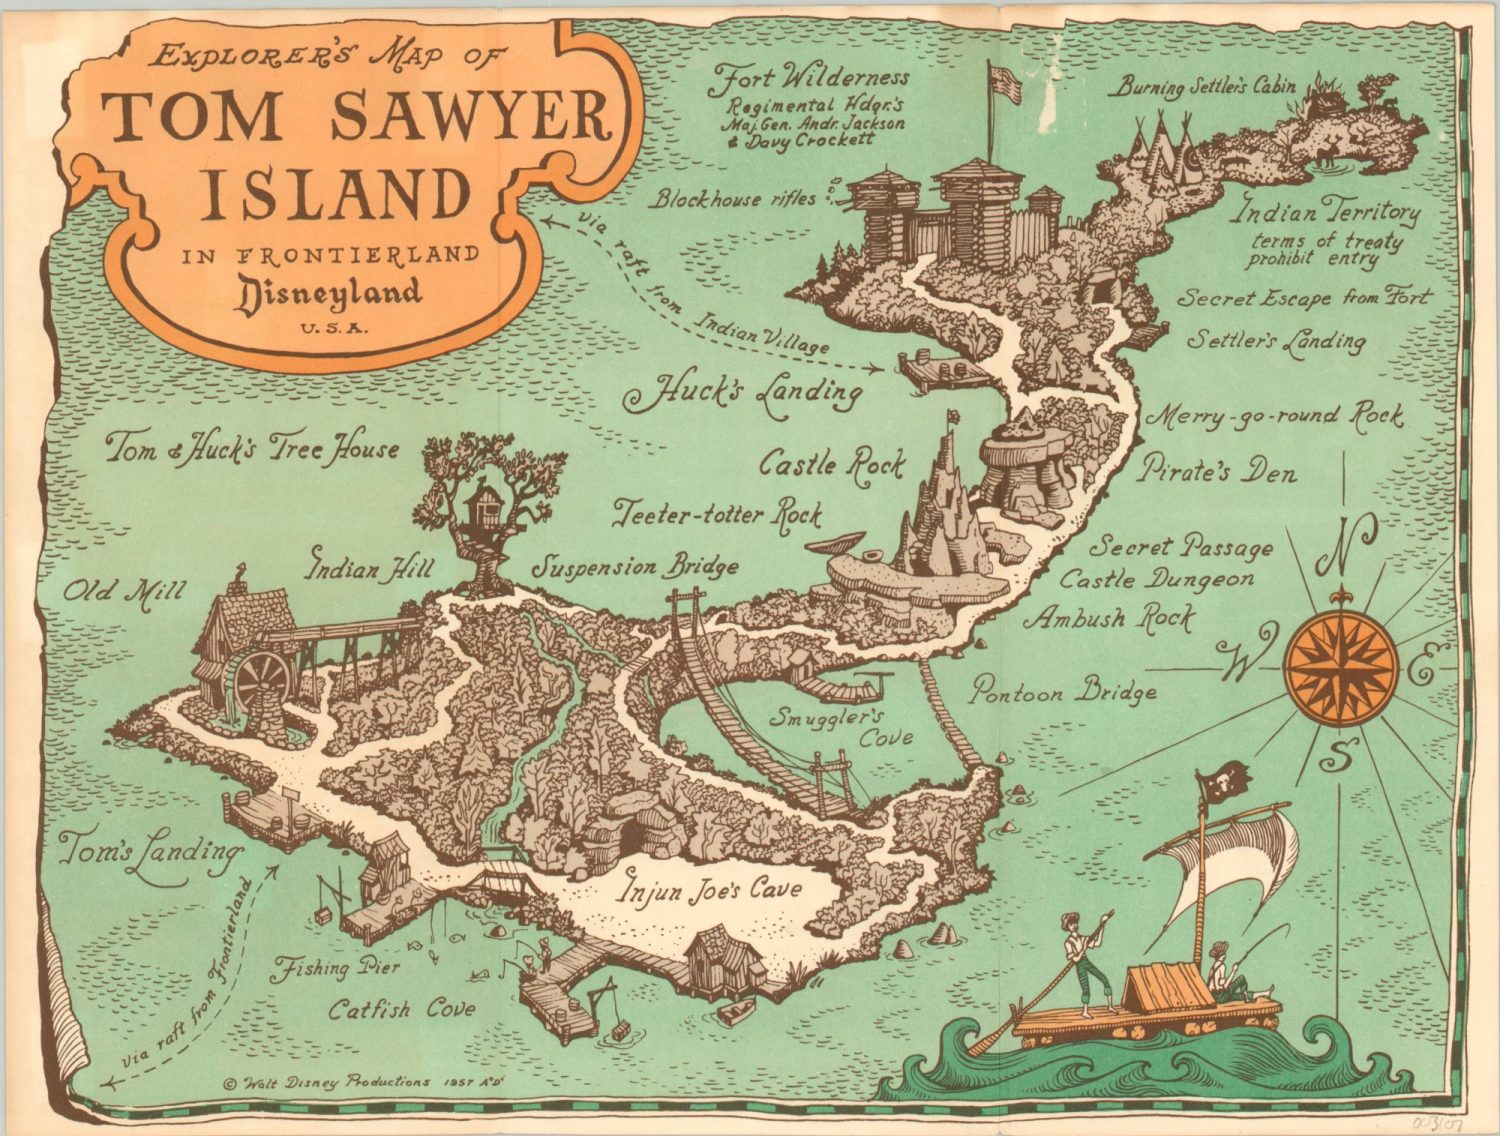 EXPLORERS MAP OF TOM SAWYER ISLAND